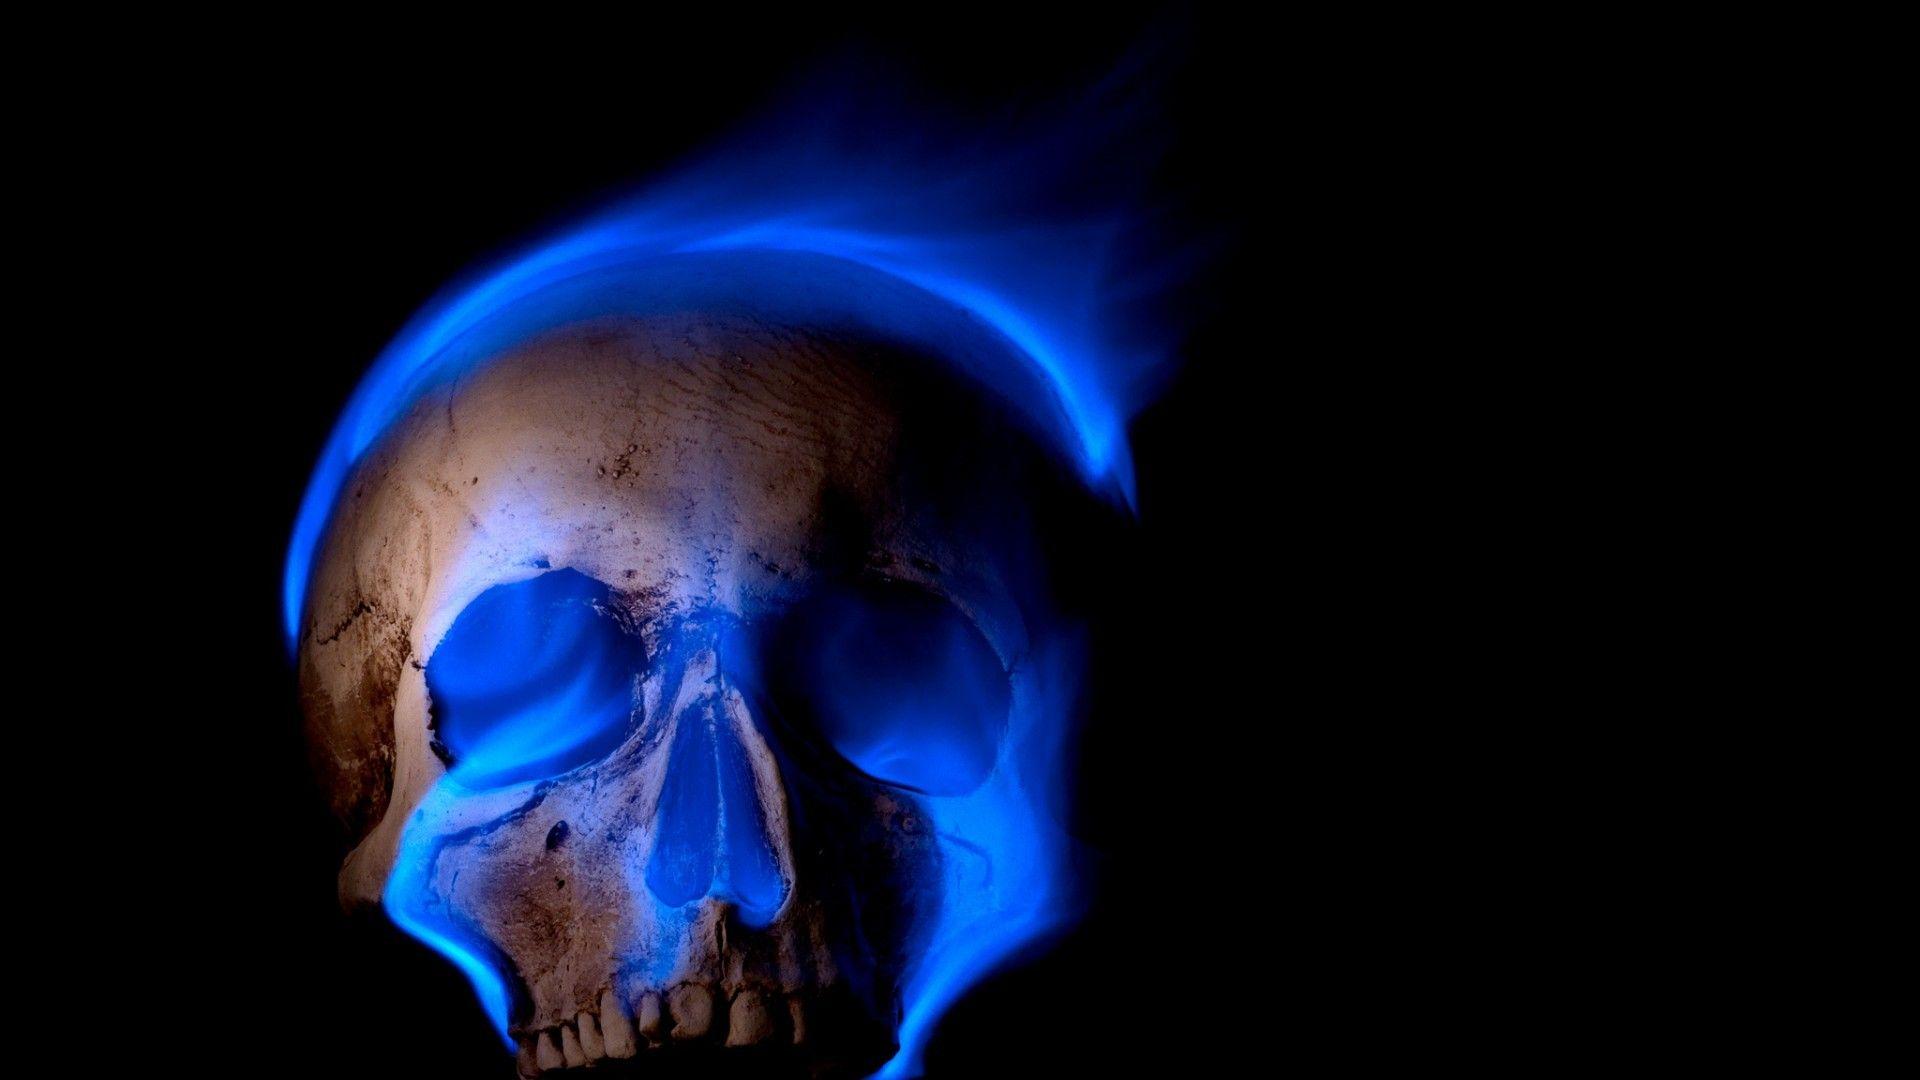 digital Art, Skull, Black Background, Teeth, Burning, Blue Flames